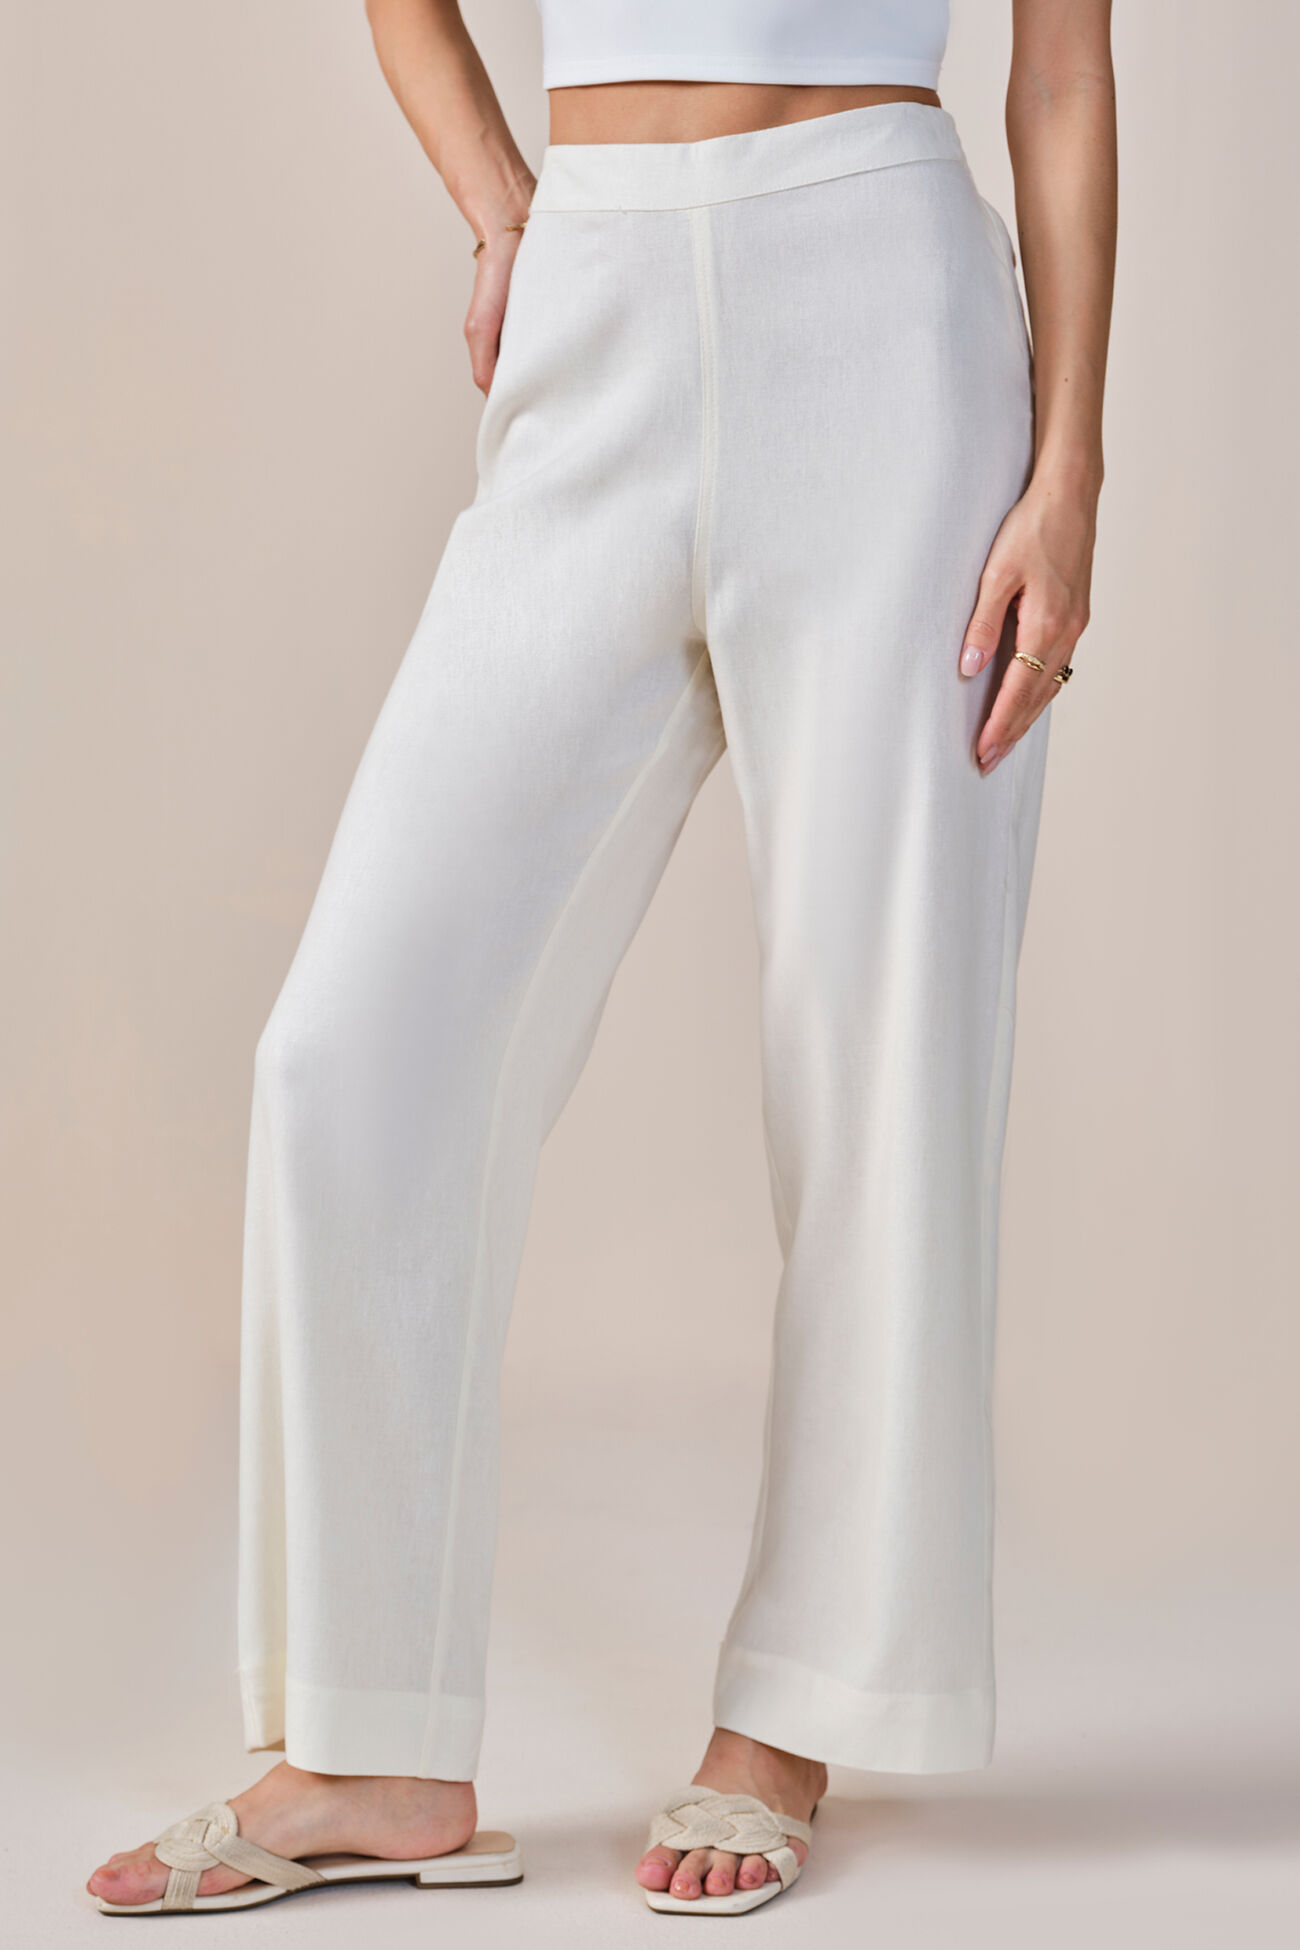 Impression Mode Linen Viscose Blend Trousers, White, image 2